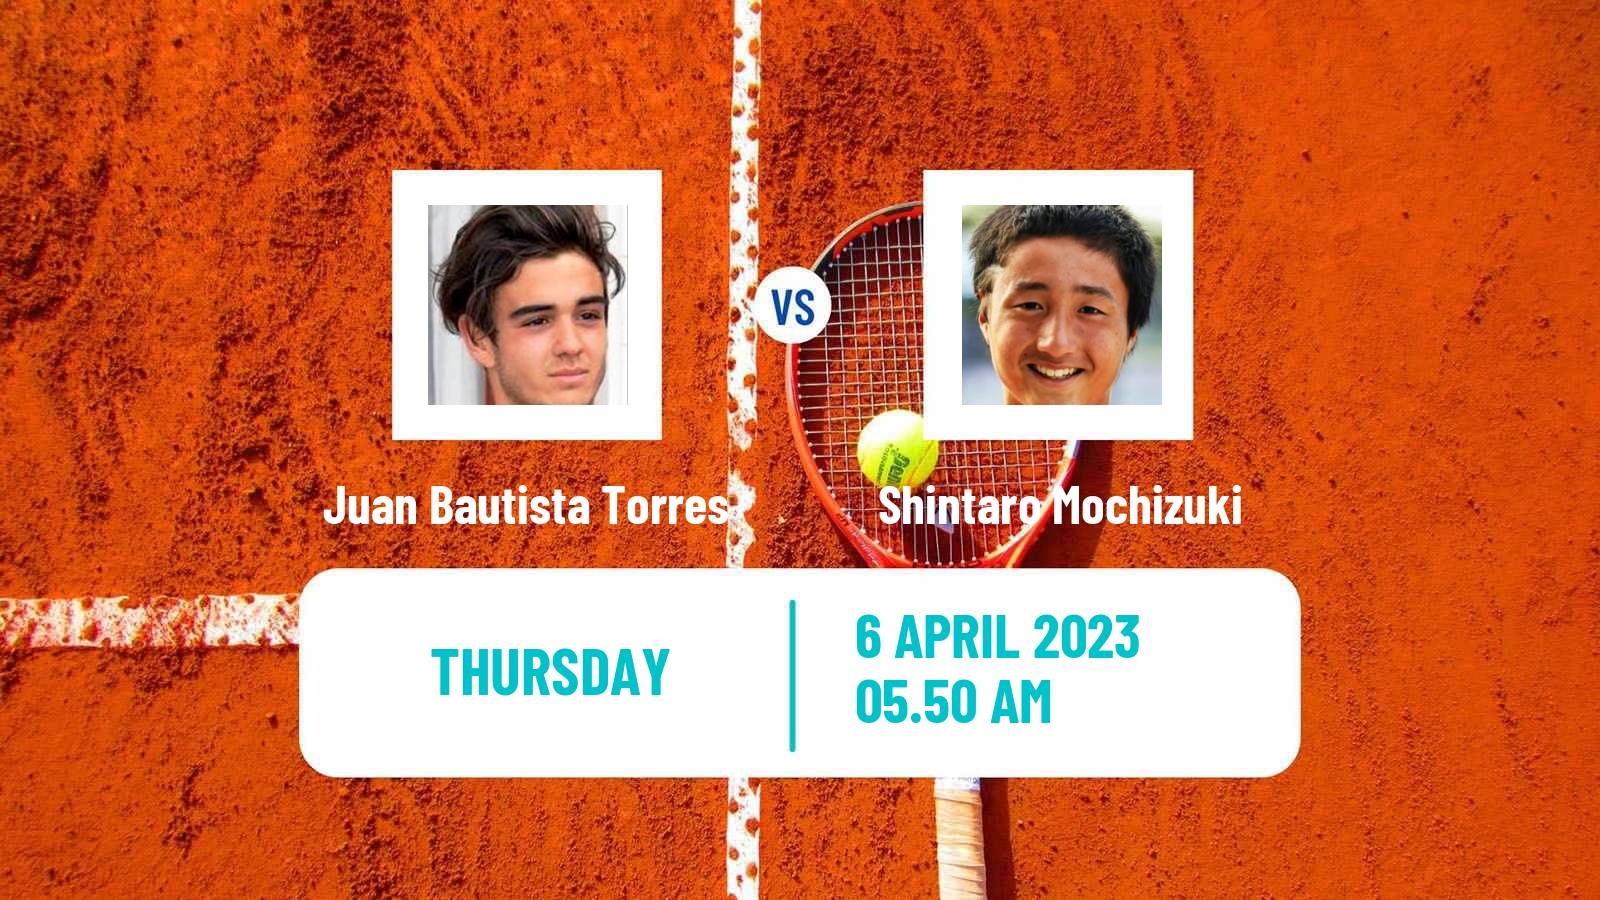 Tennis ATP Challenger Juan Bautista Torres - Shintaro Mochizuki